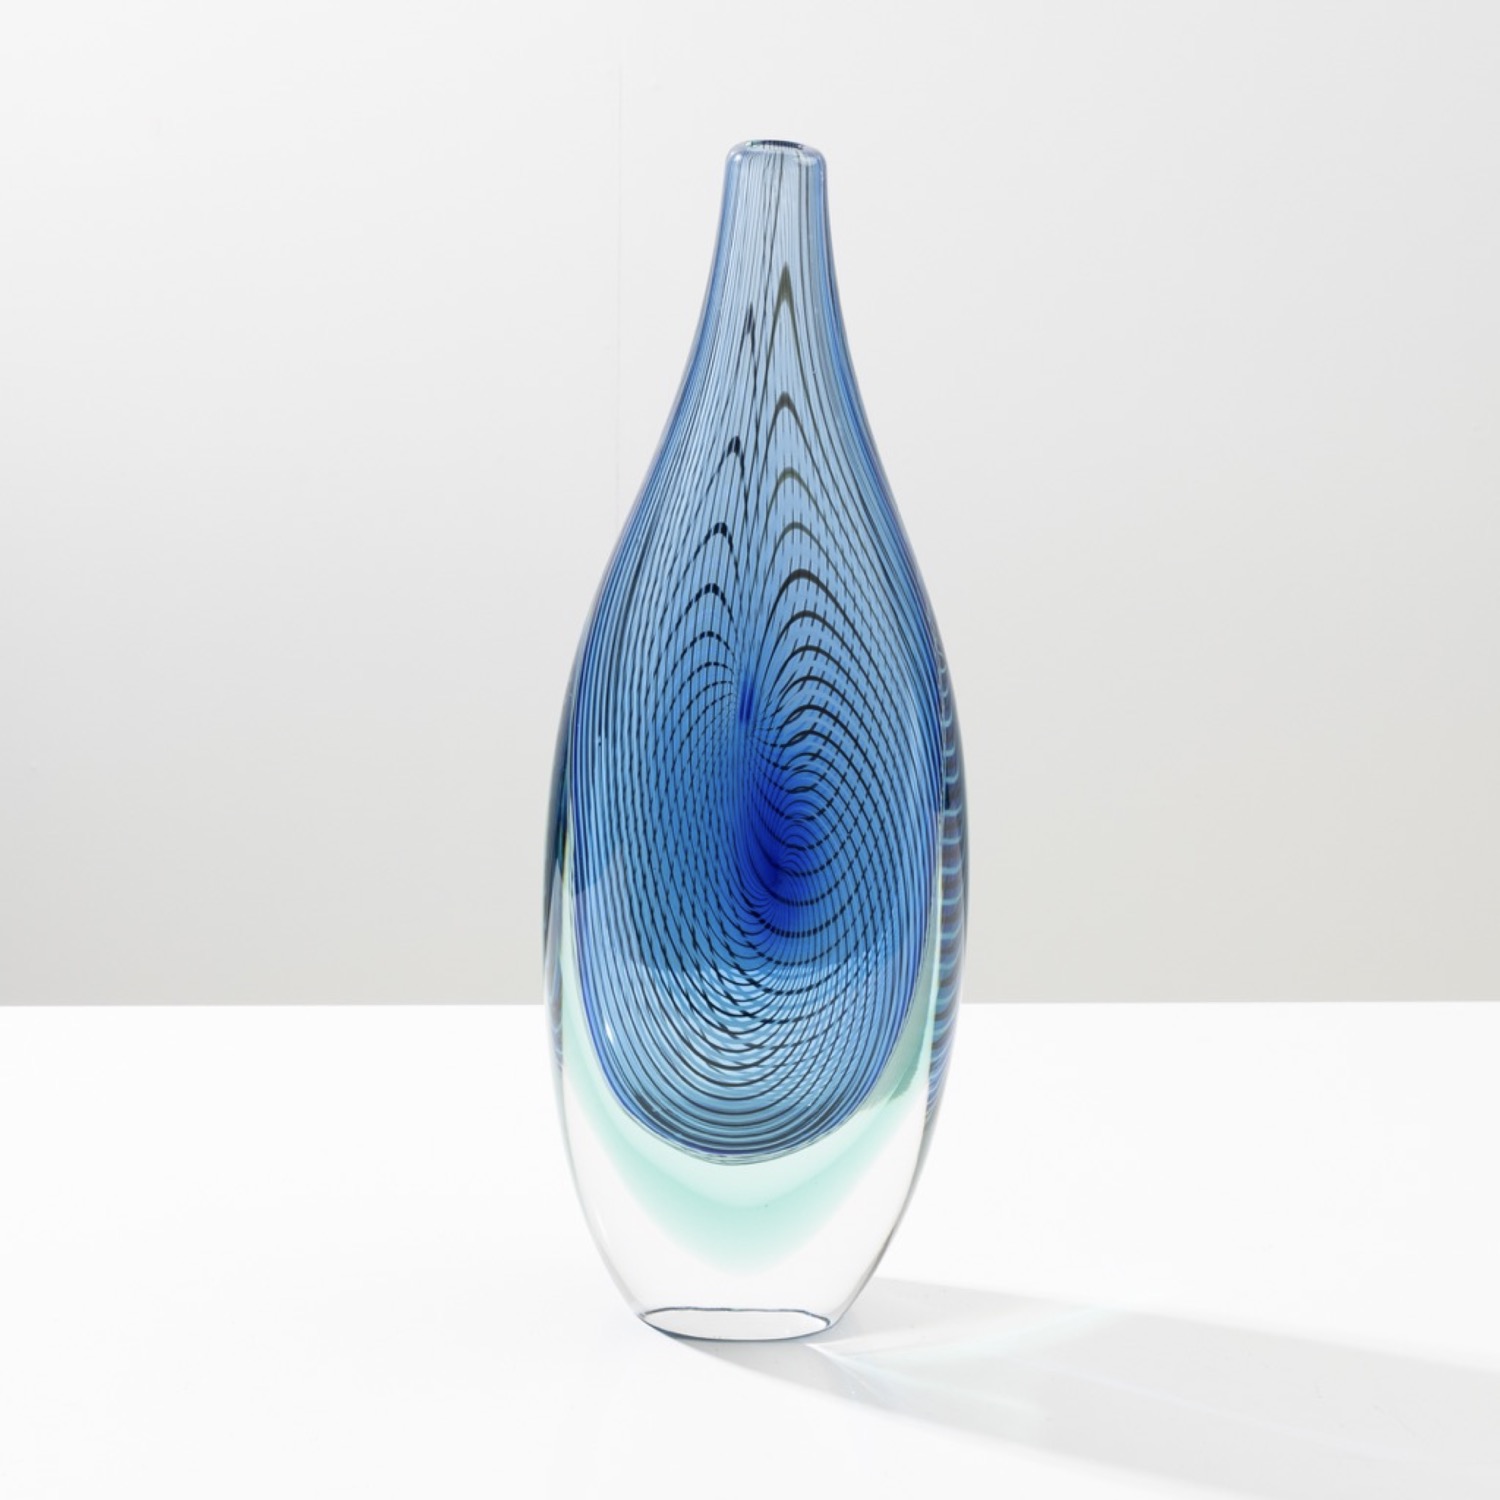 UF03_21 Capo Nord Sommerso blown glass vase Seguso Vetri d'Arte-5